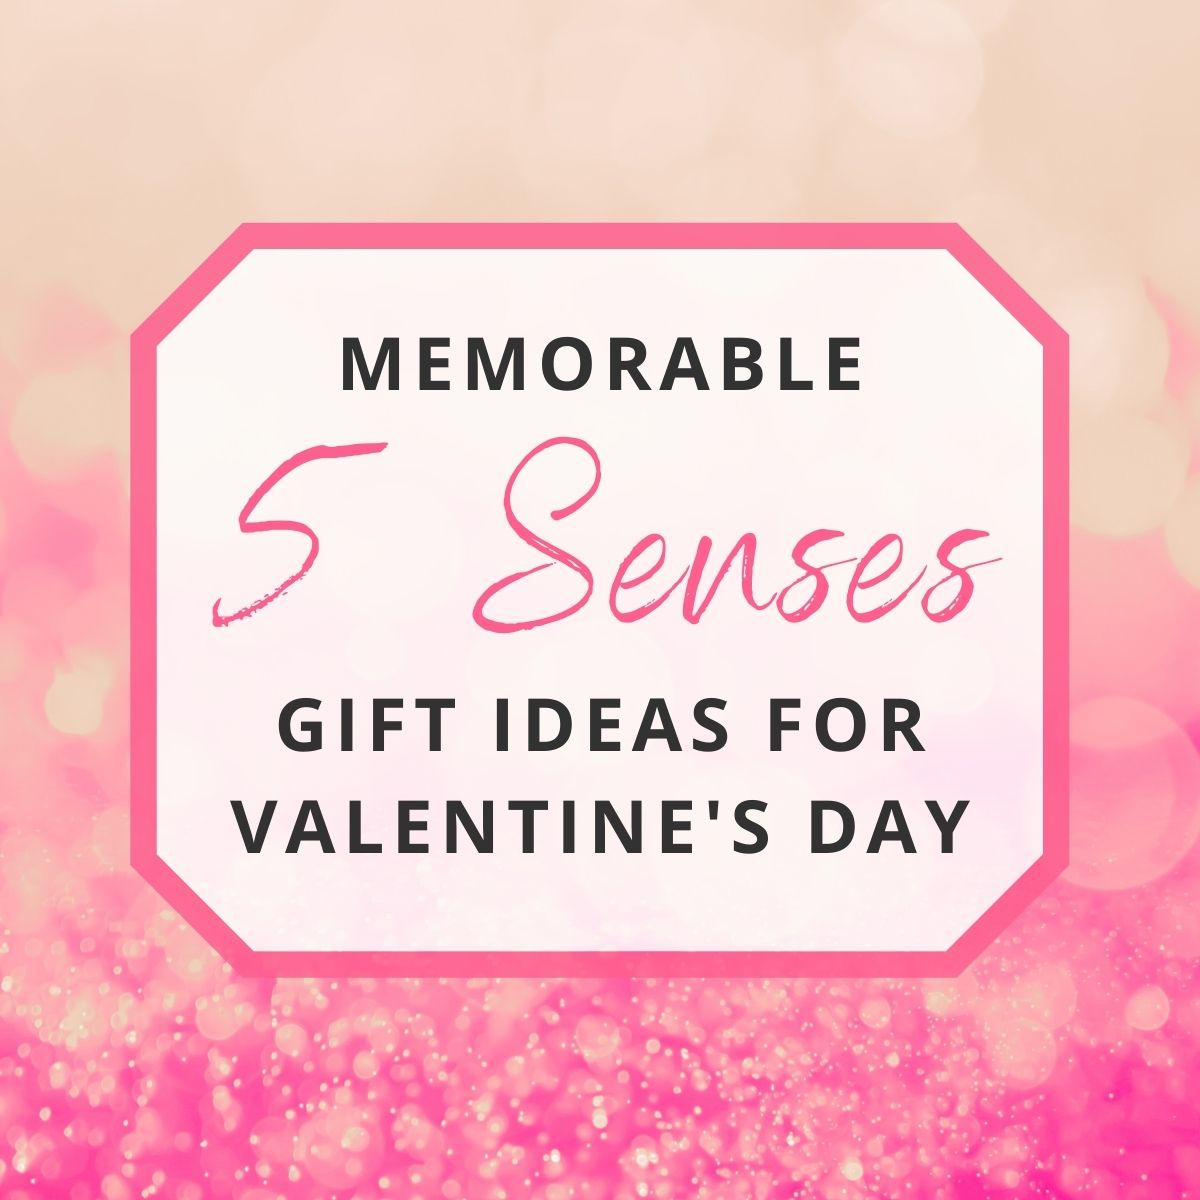 5 senses gift ideas for valentines day